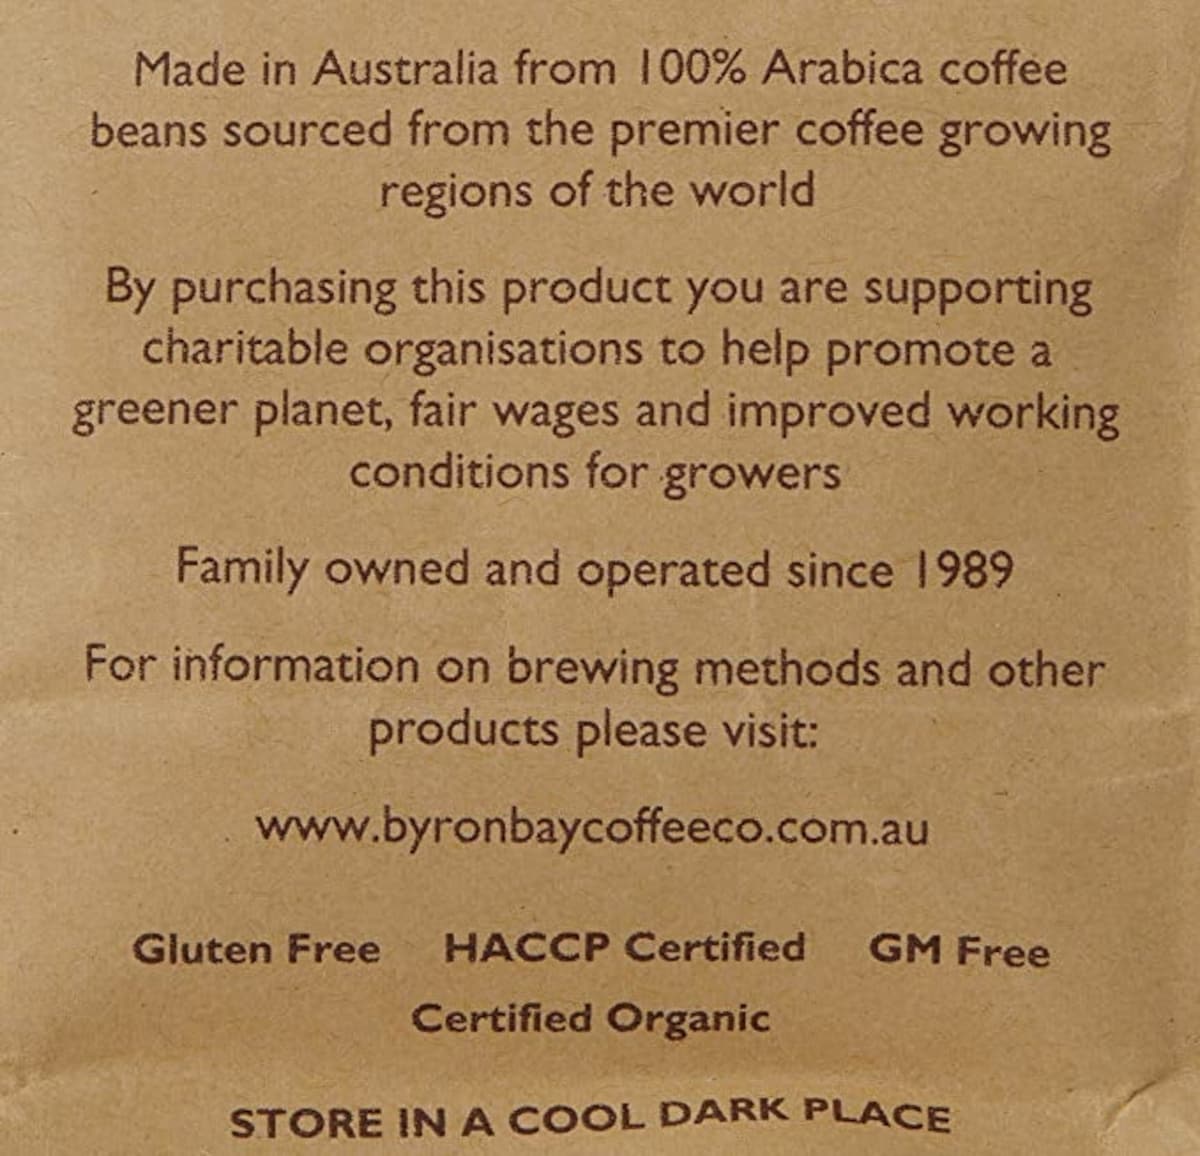 Byron Bay Coffee Company Organic Plunger Ground 250g